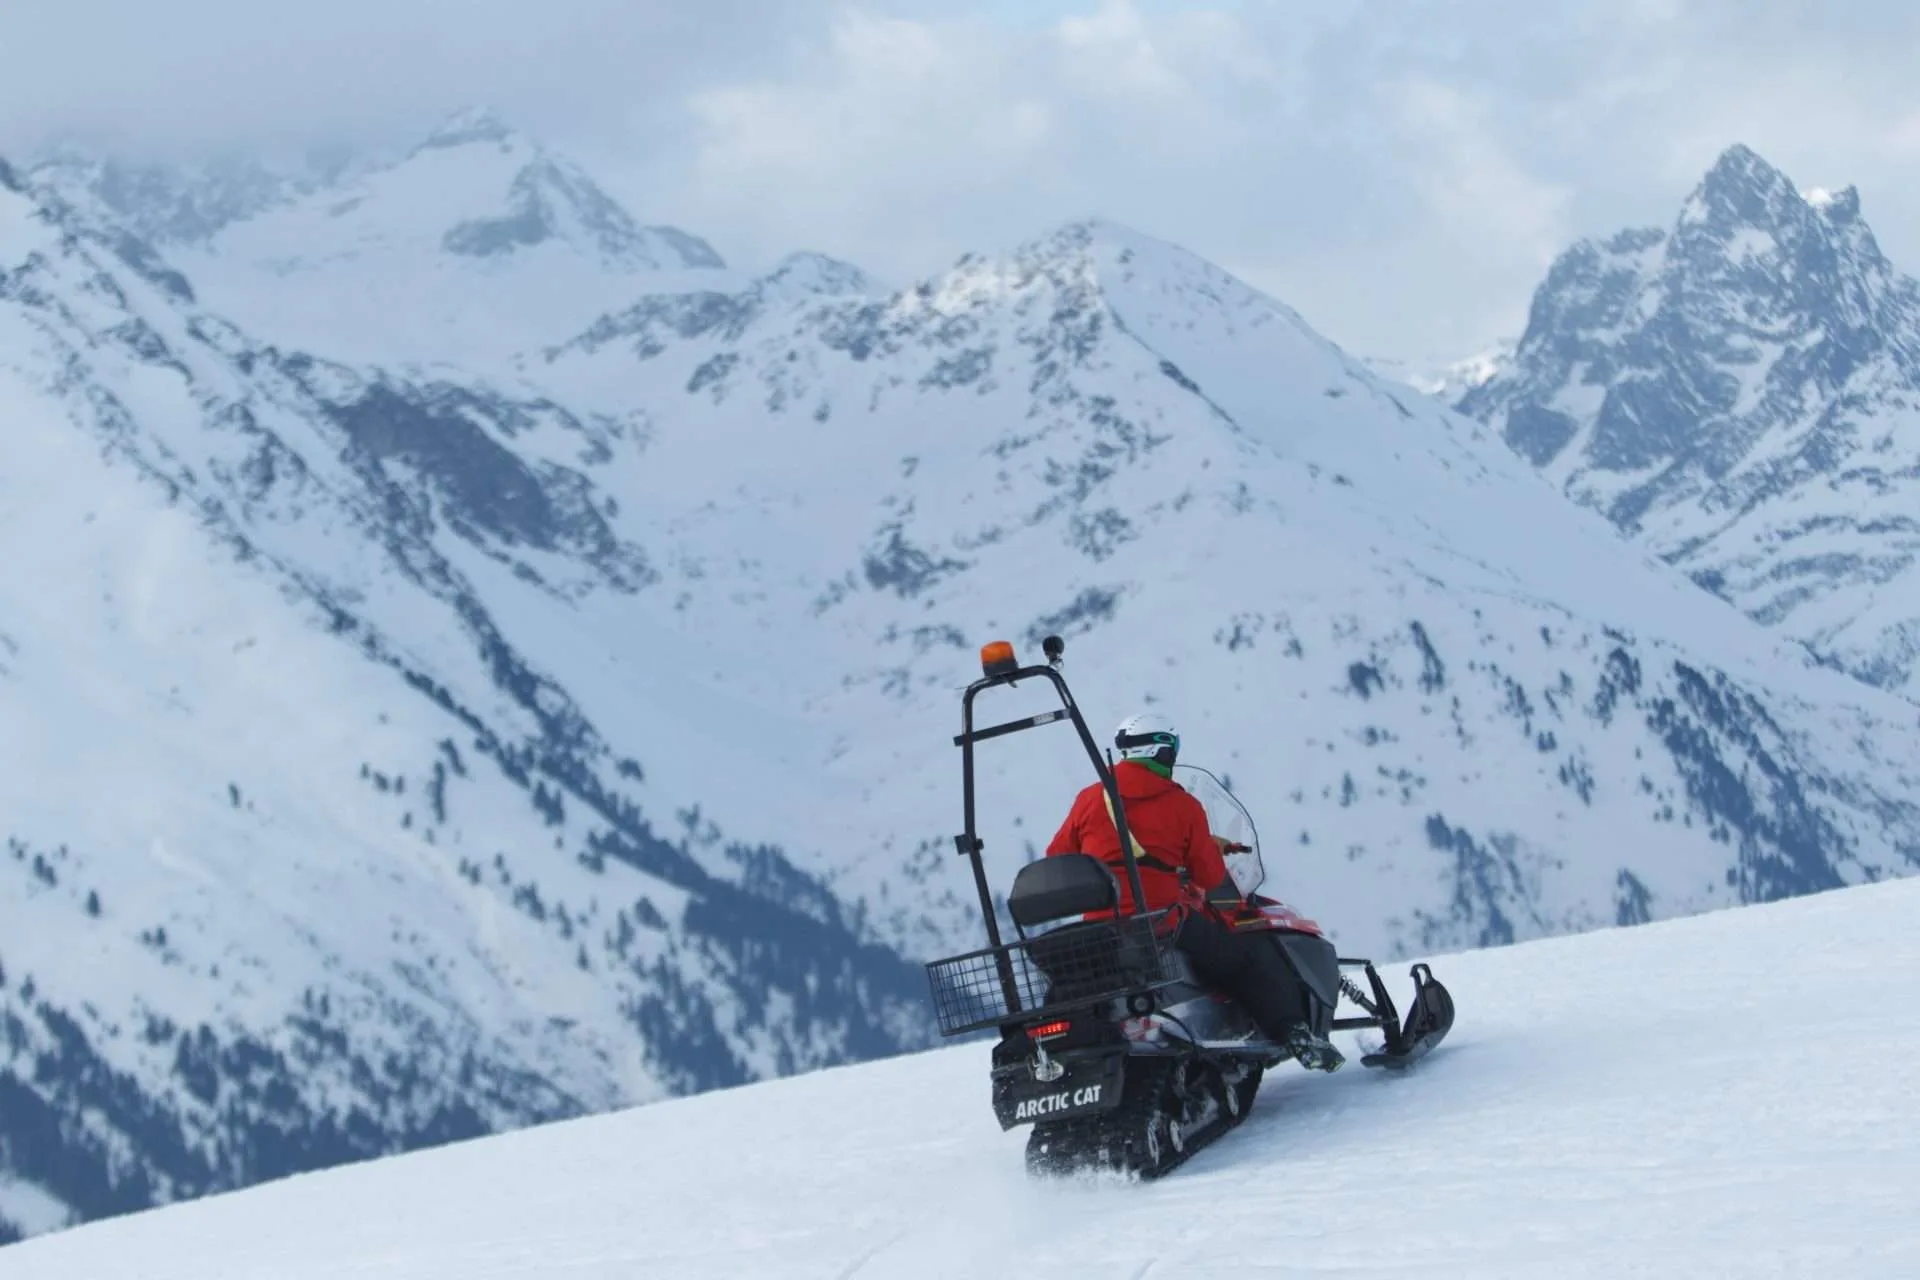 Man driving snow mobile ORV on snowy mountain.